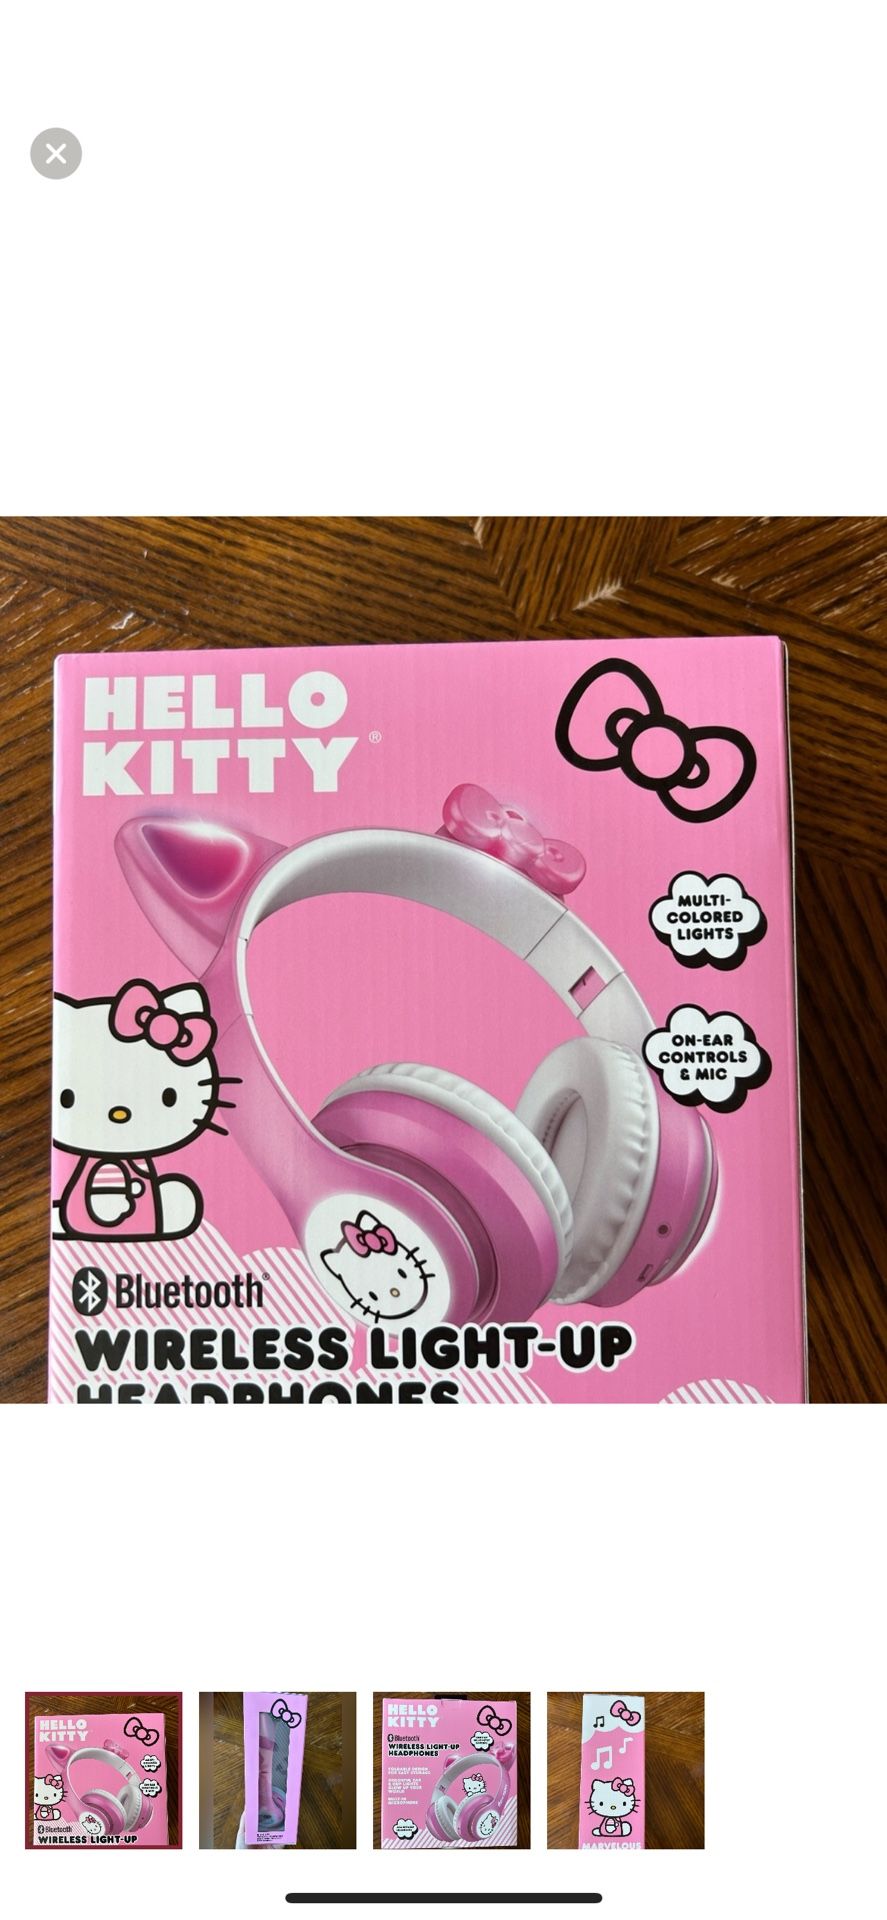 NWT Limited Edition Hello Kitty Bluetooth wireless light-up headphones